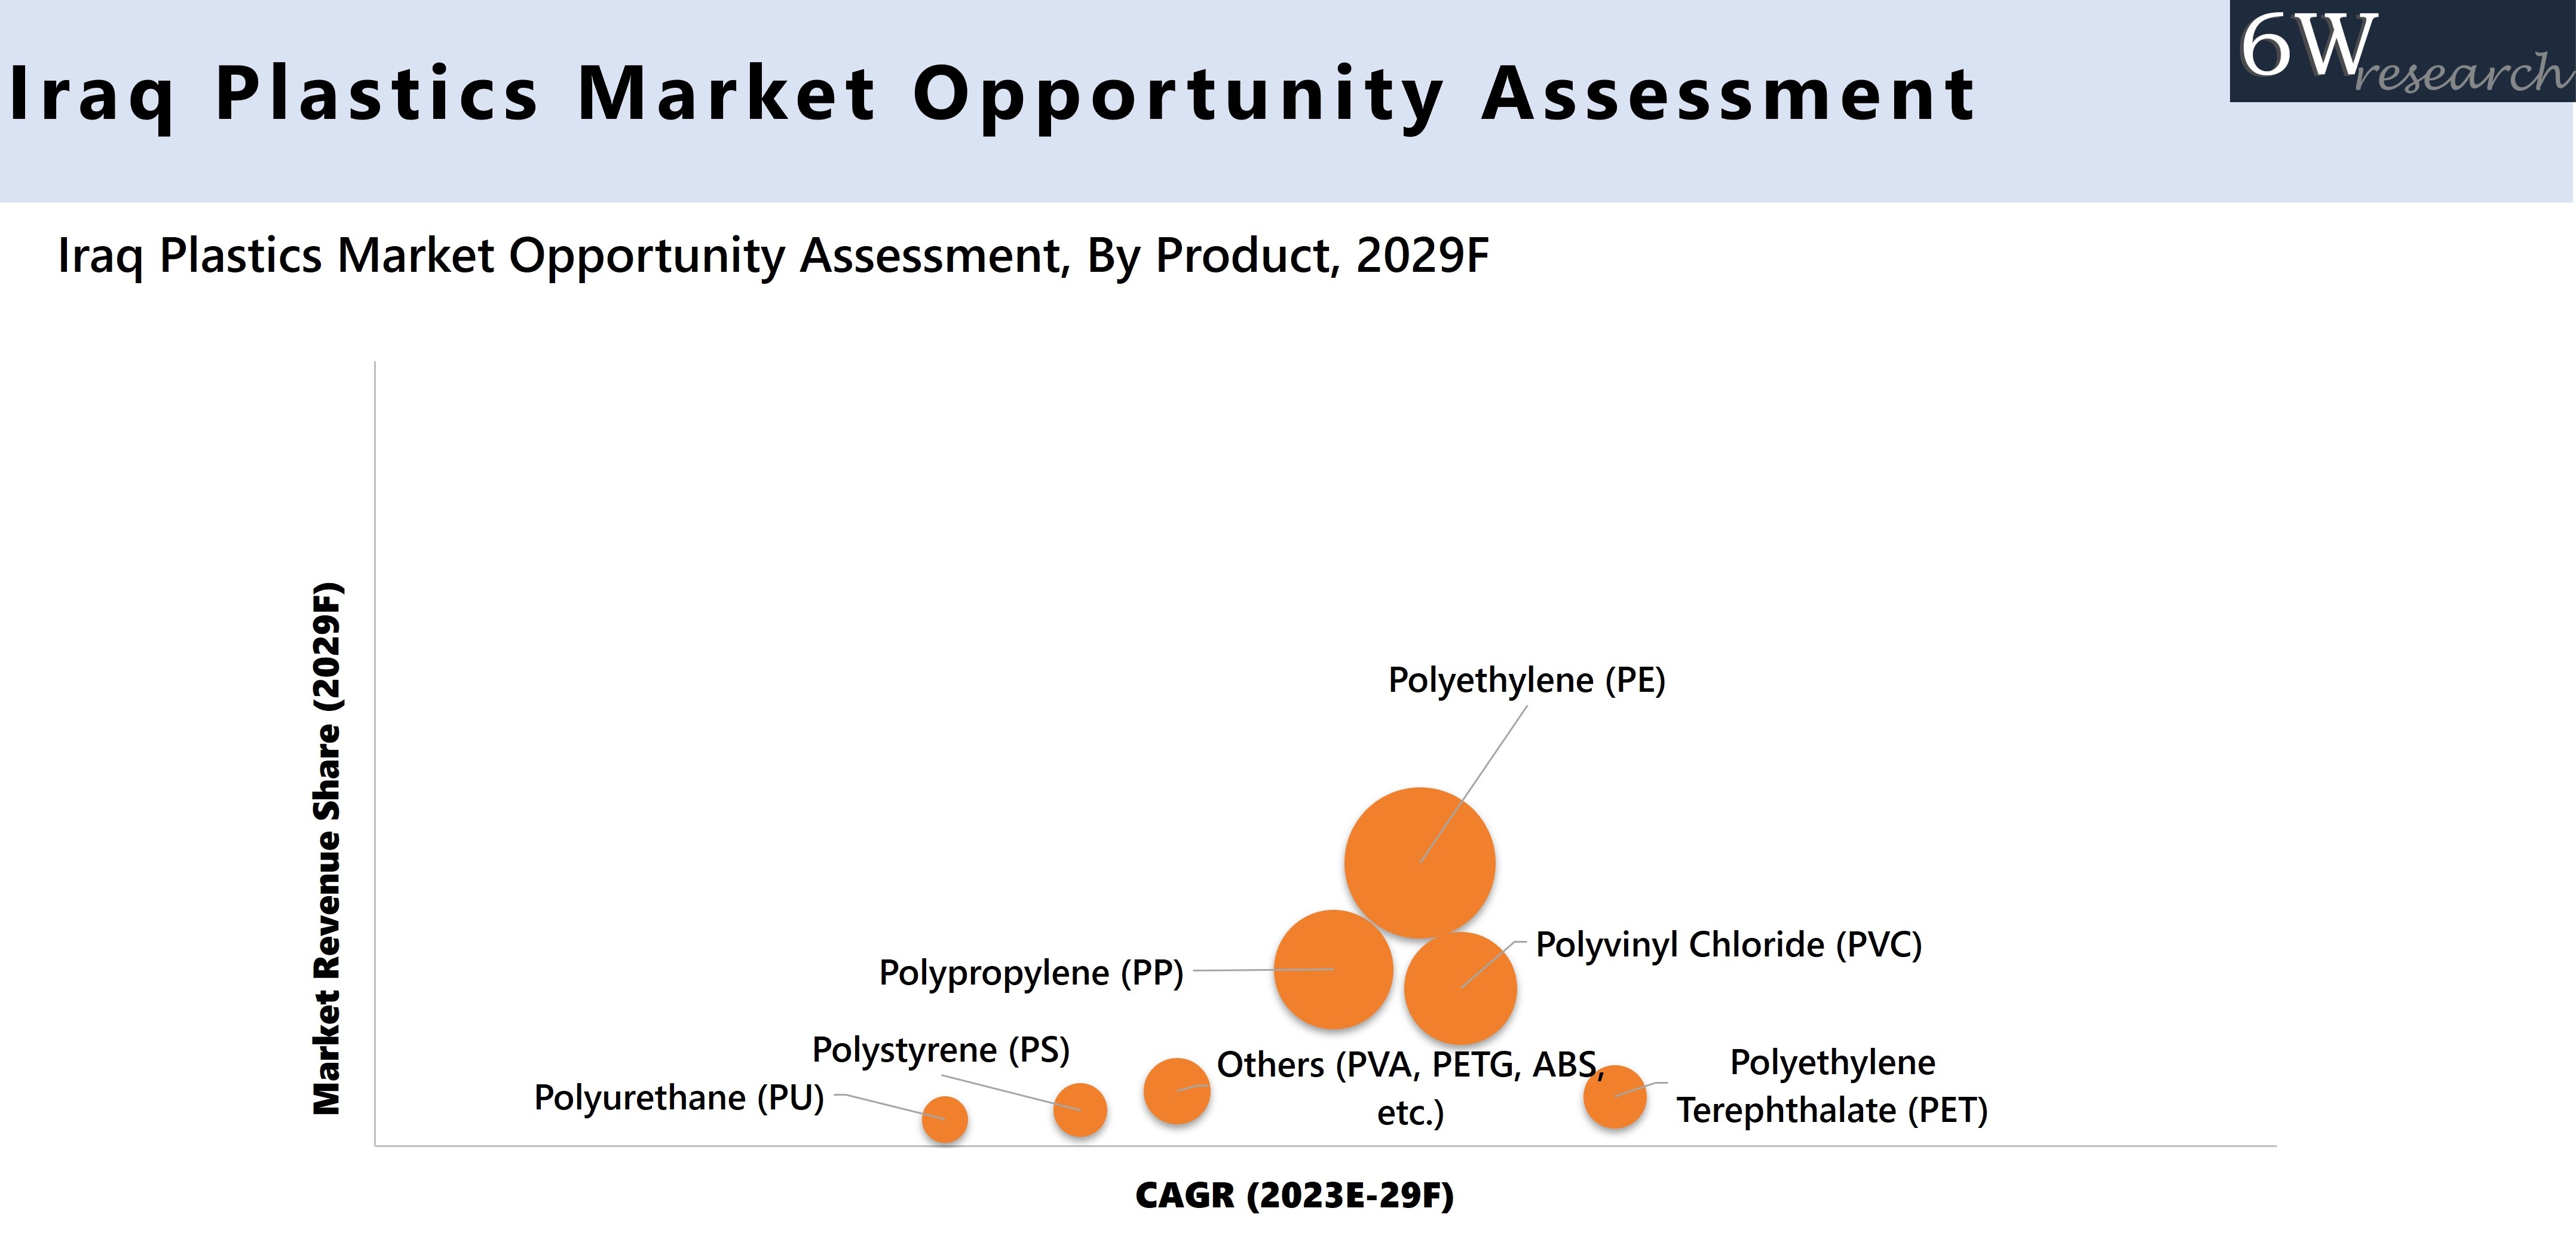 Iraq Plastics Market Opportunity Assessment